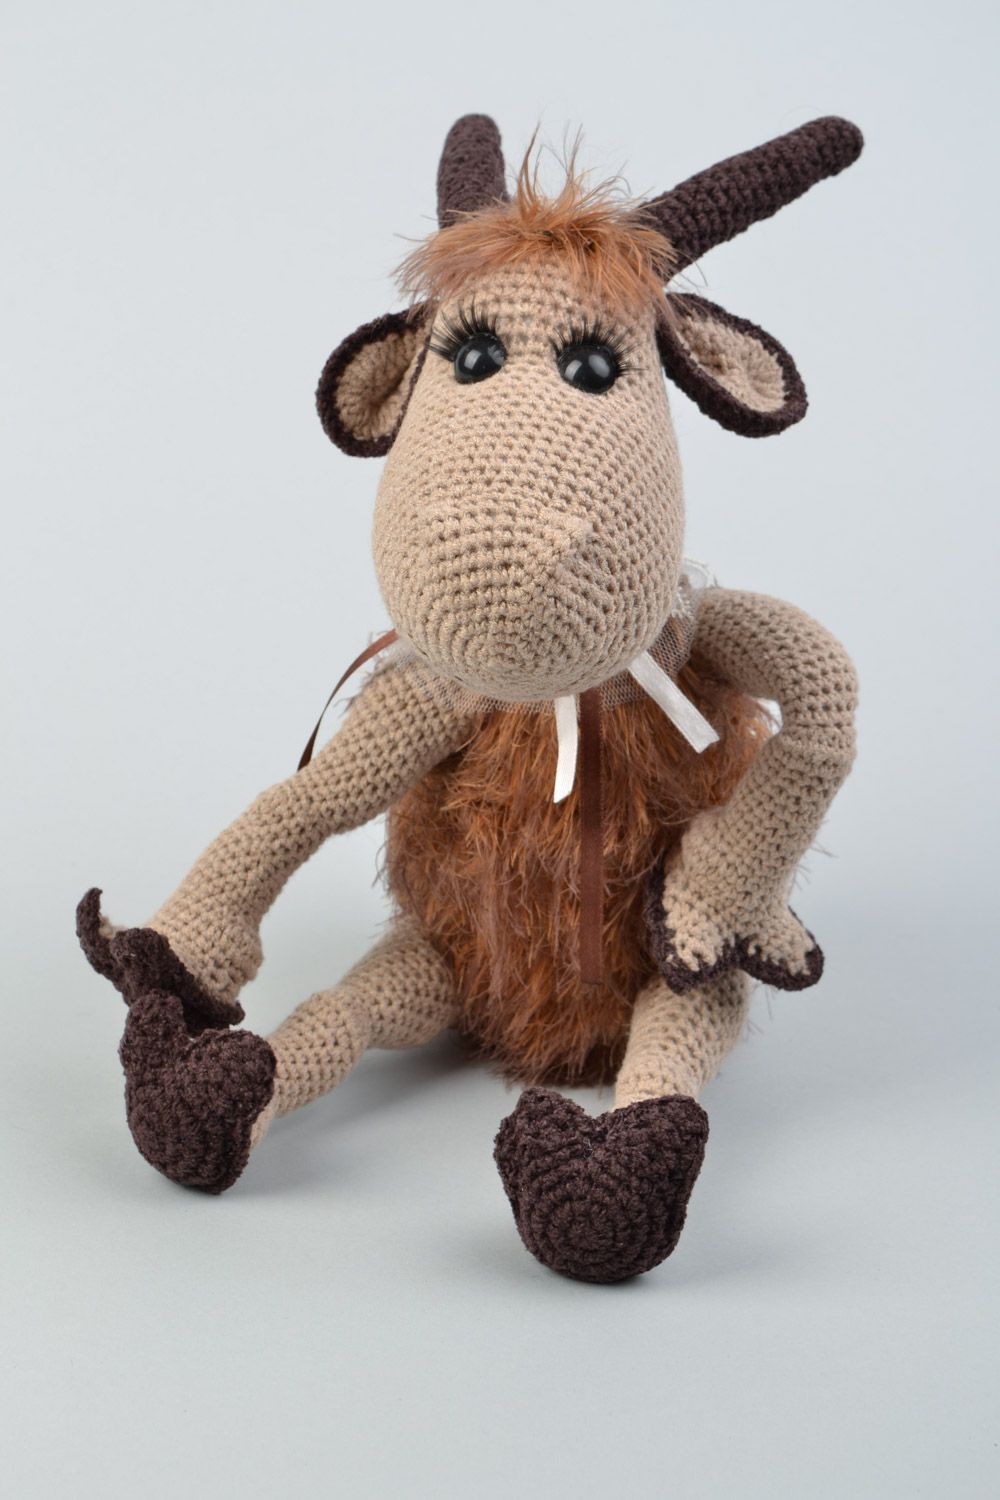 Handmade soft crochet toy nanny goat for children and home decor photo 4